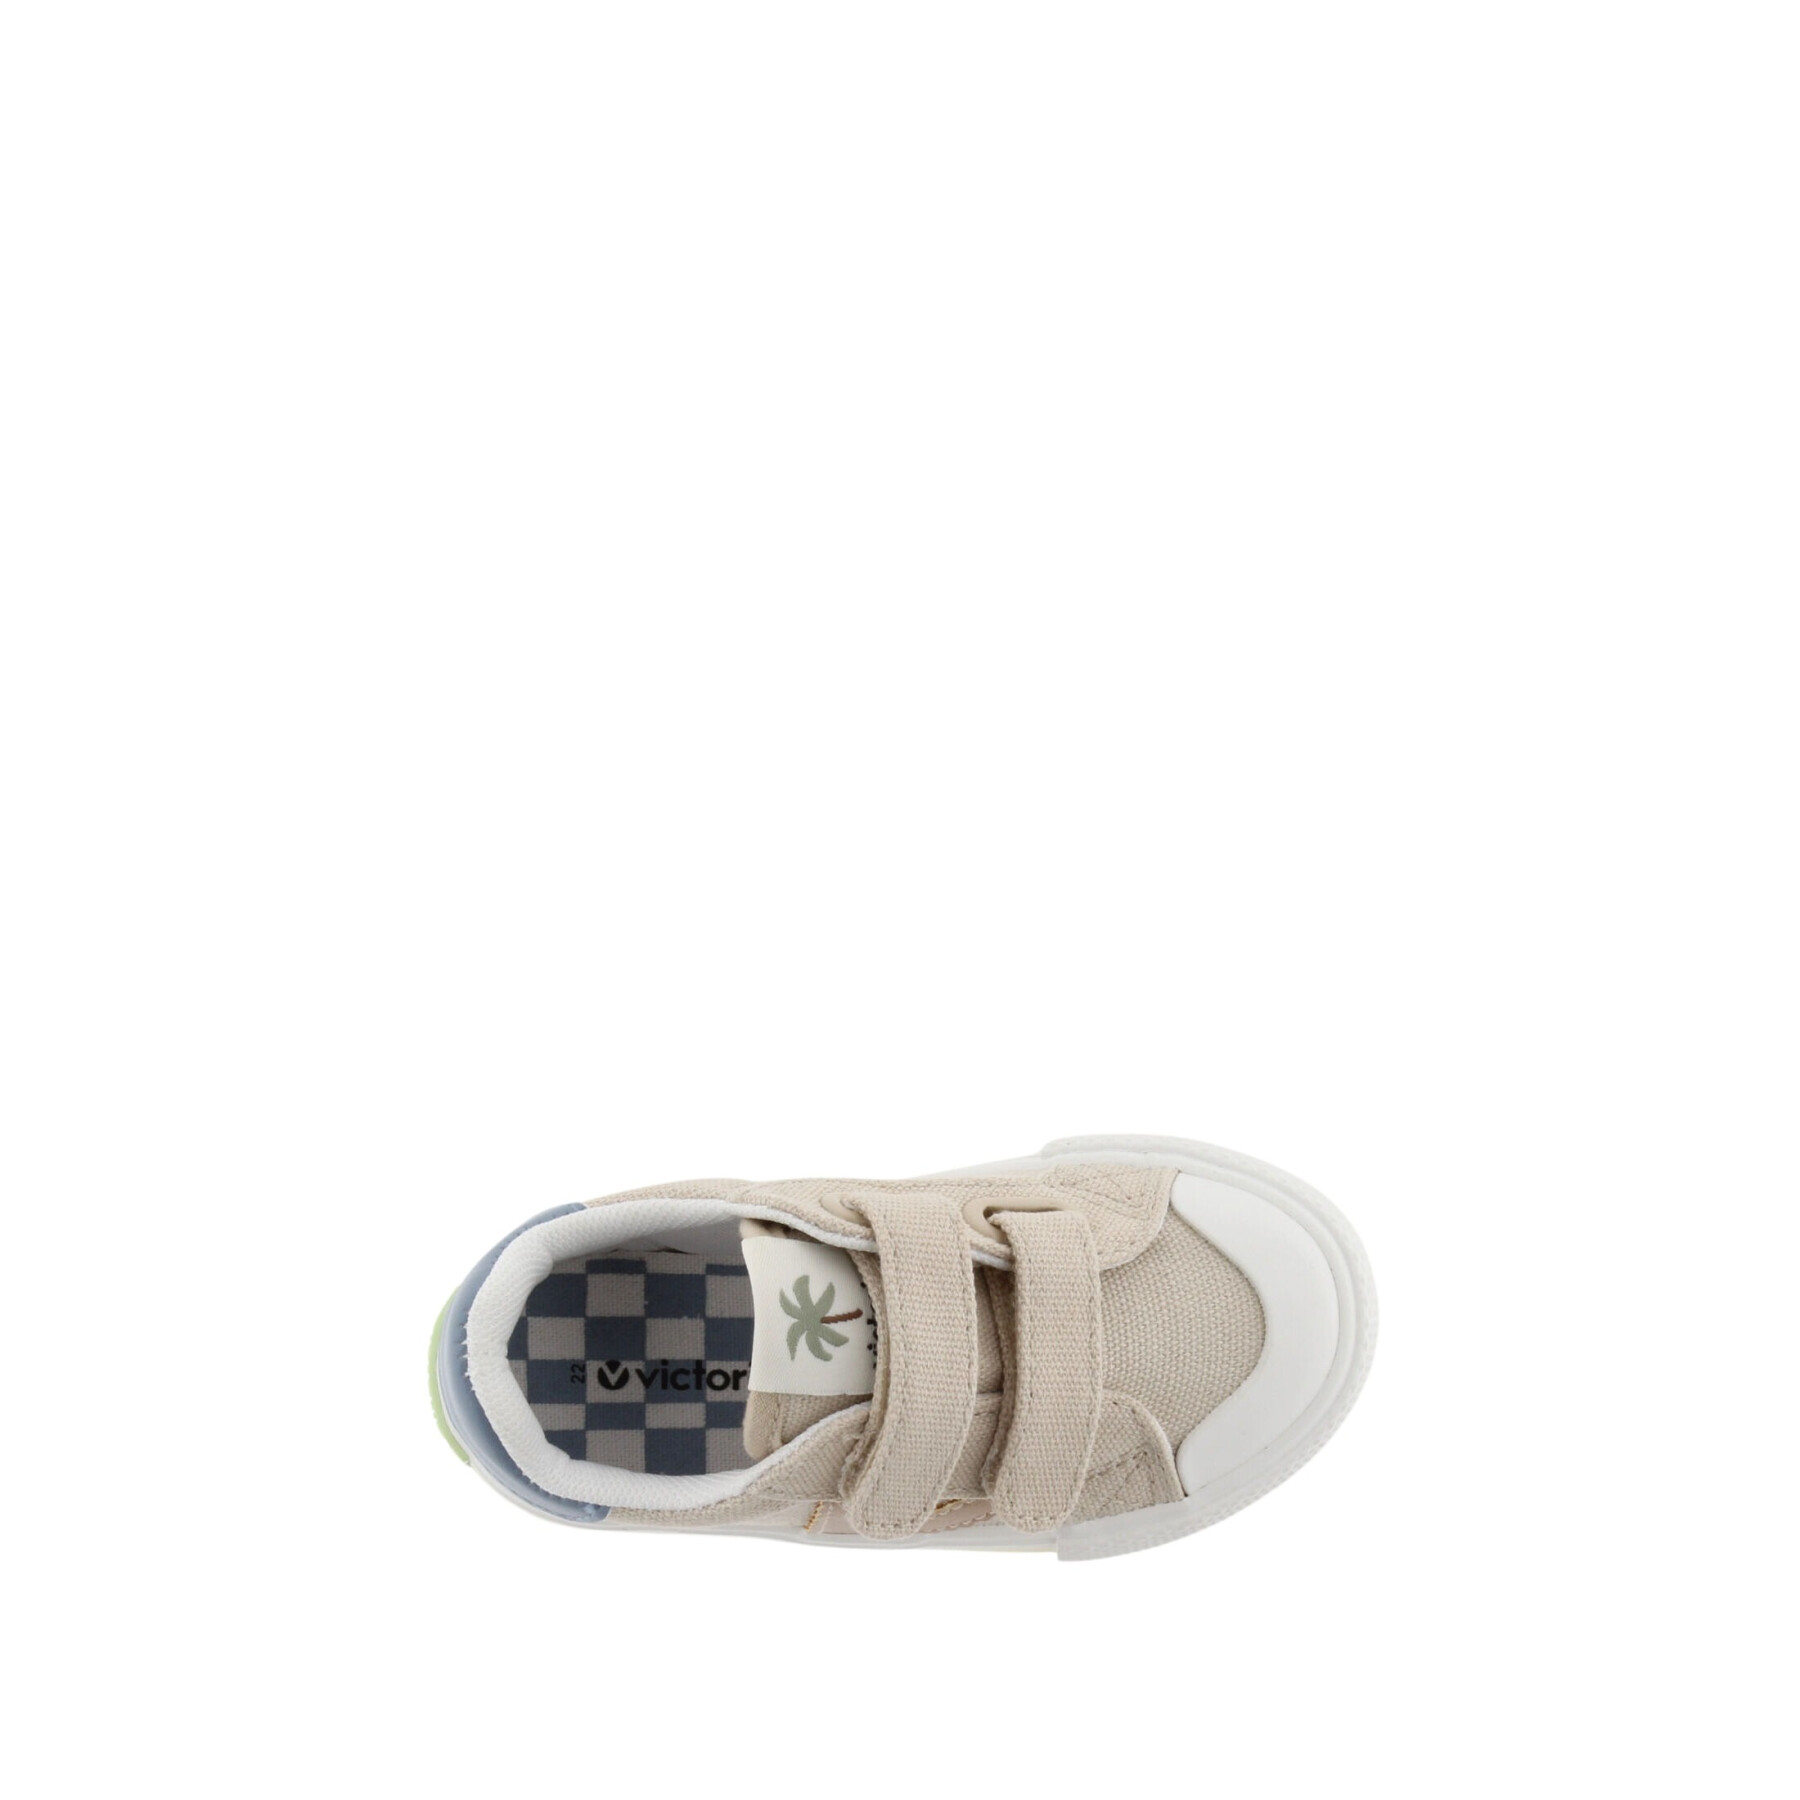 Baby sneakers Victoria Aguamarina